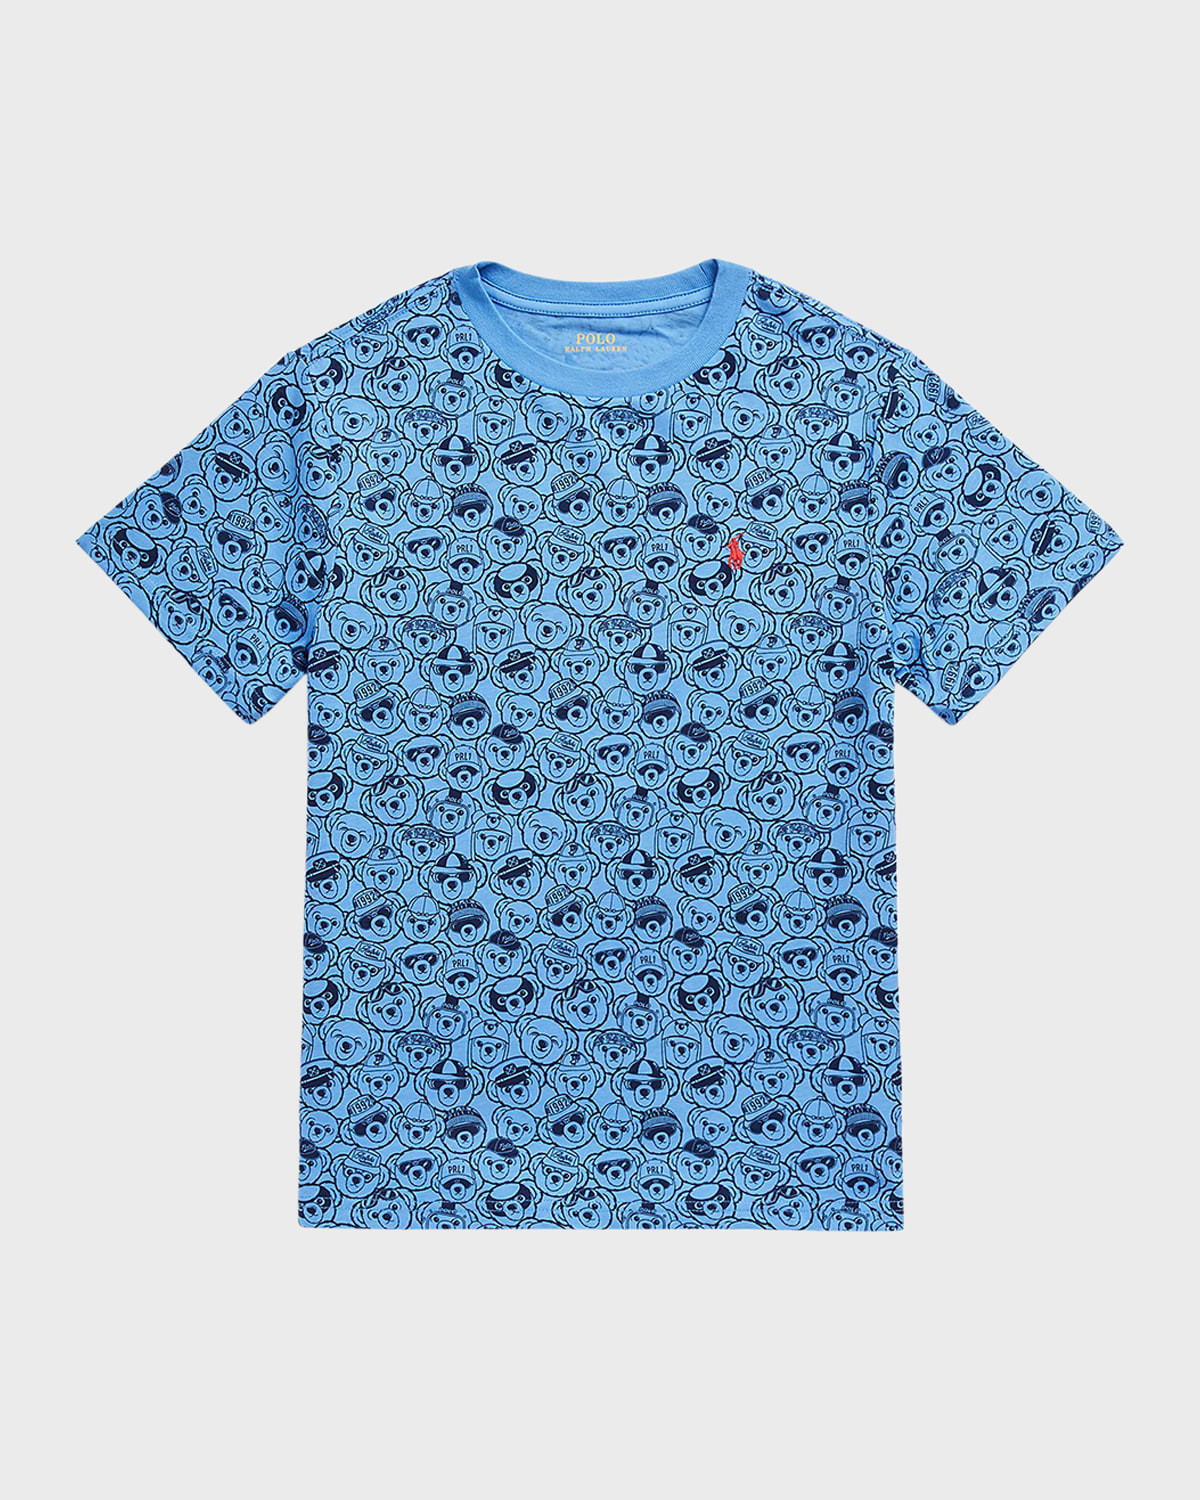 Boy's Graphic Polo Bear T-Shirt, Size S-XL